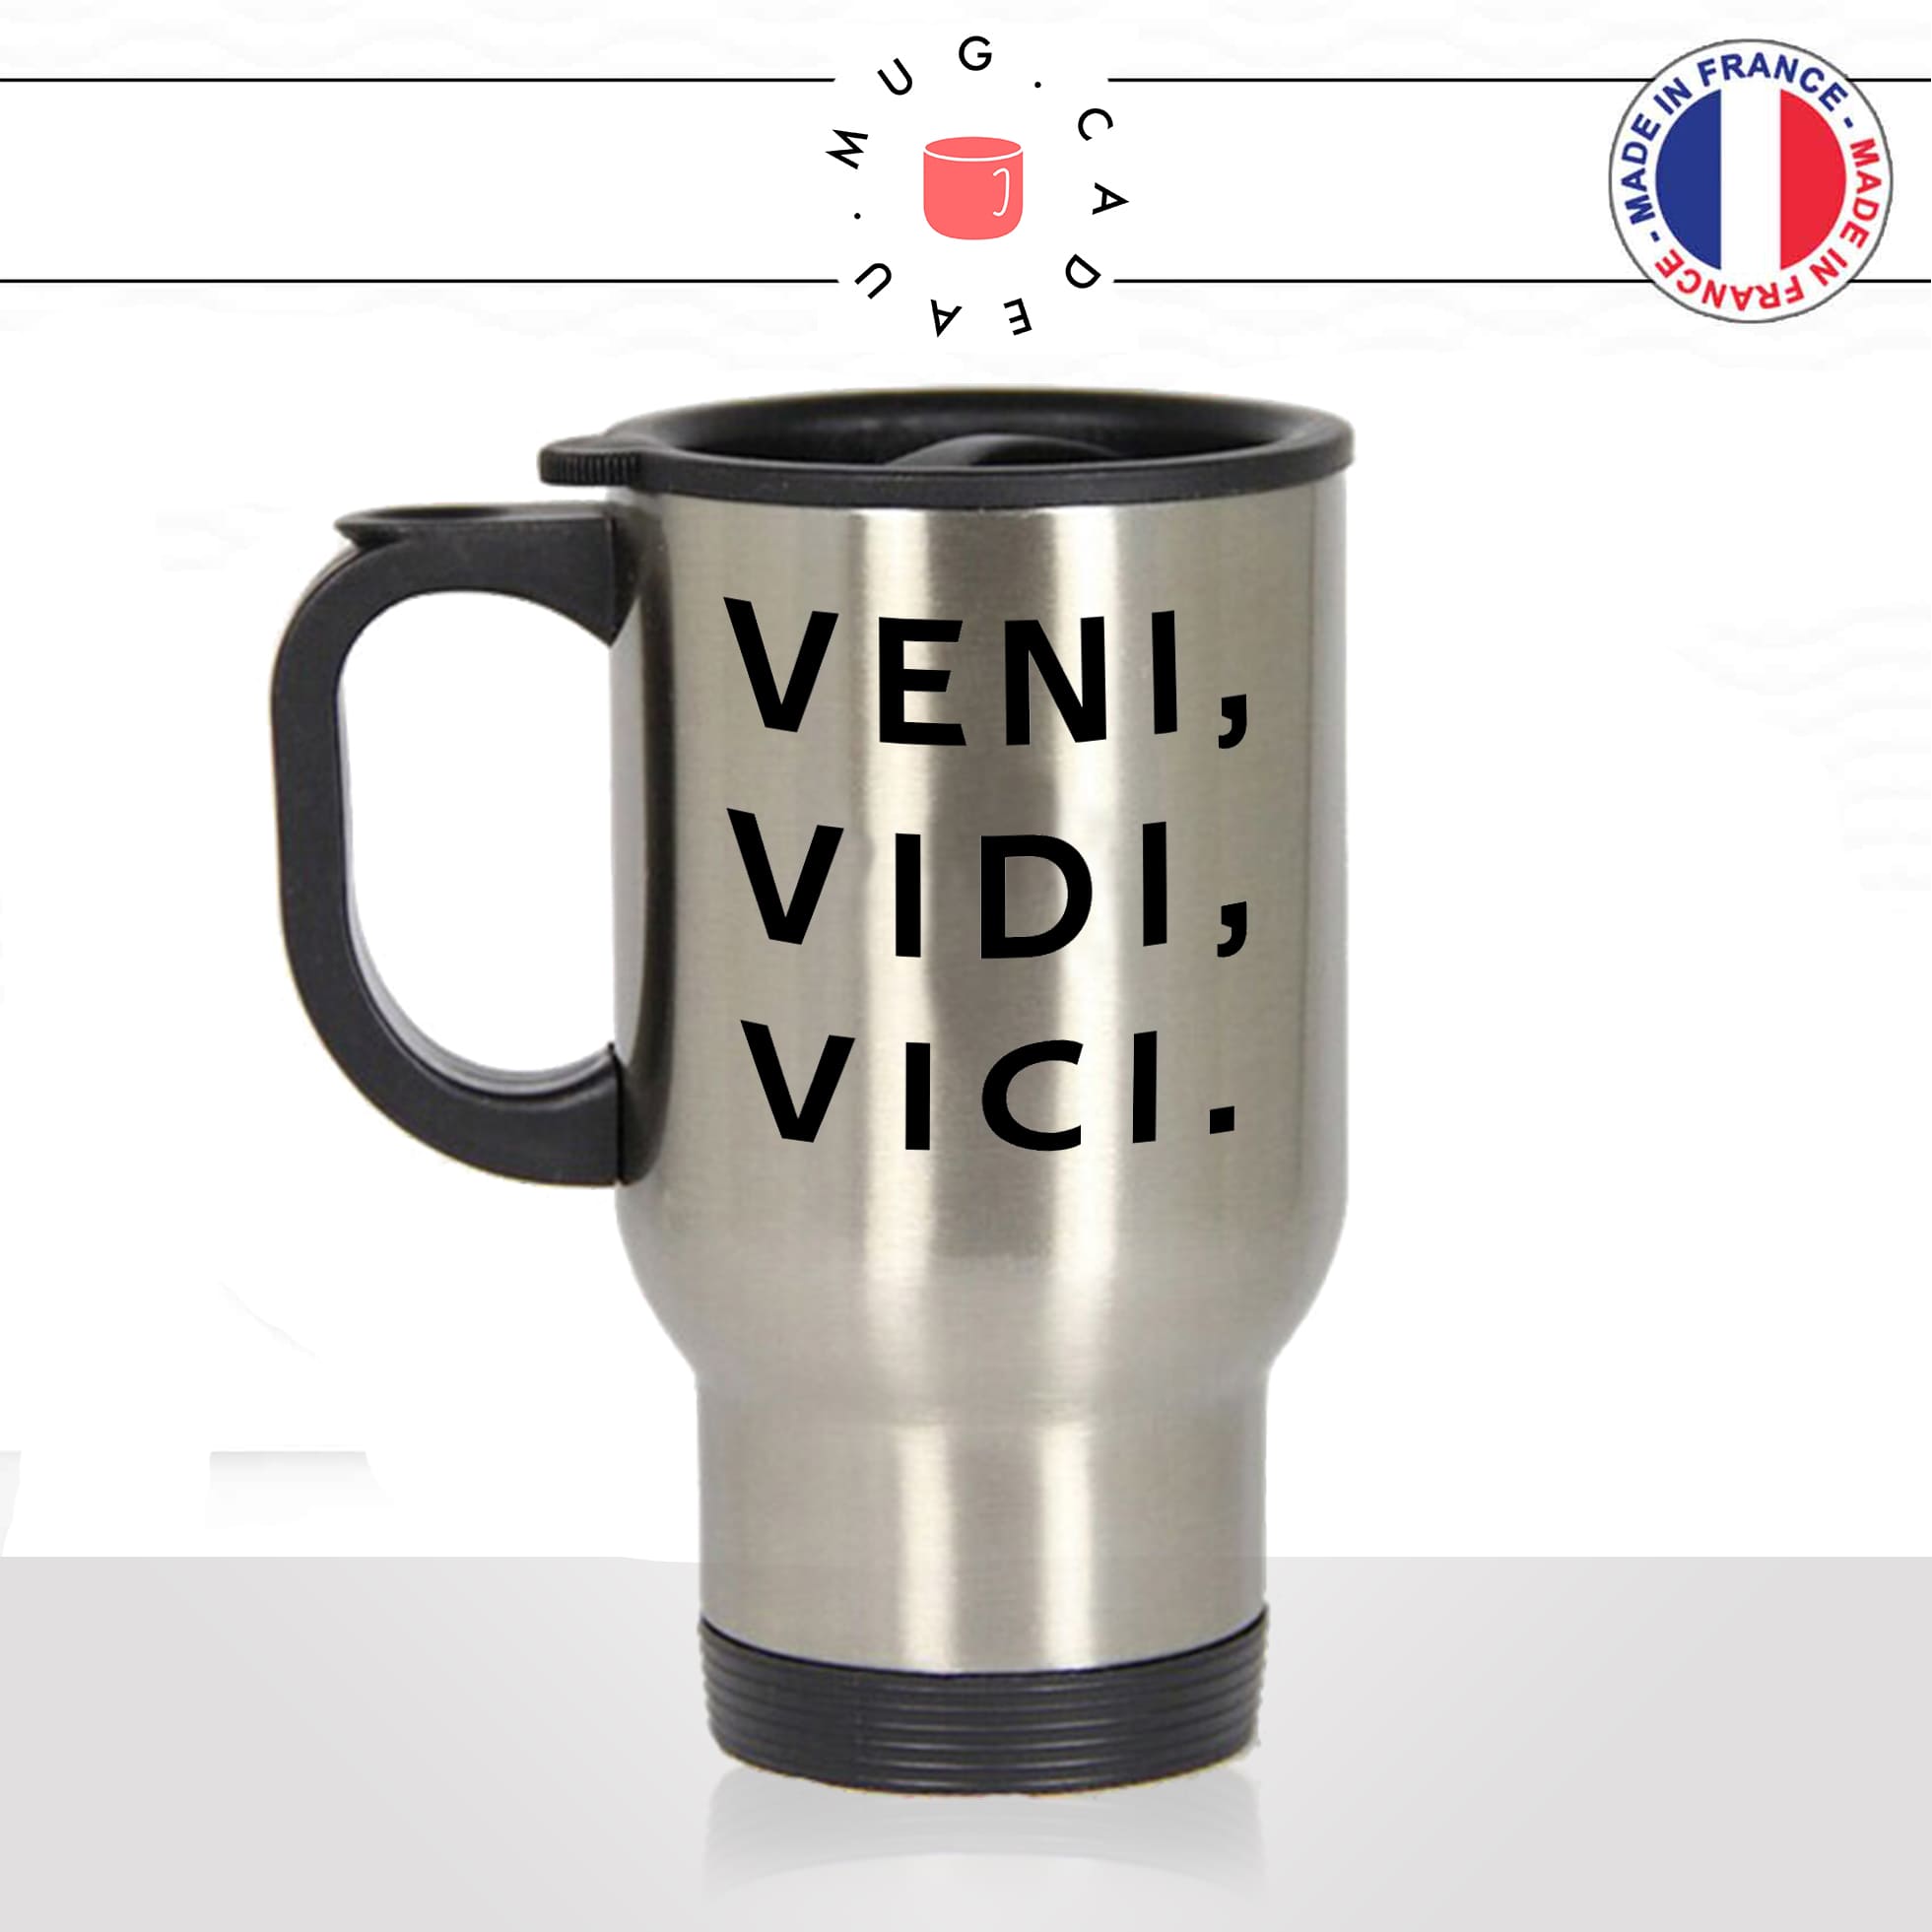 mug-tasse-thermos-isotherme-voyage-veni-vidi-vici-napoleon-latin-citataion-guerre-venu-vu-vaincu-humour-fun-idée-cadeau-originale-cool